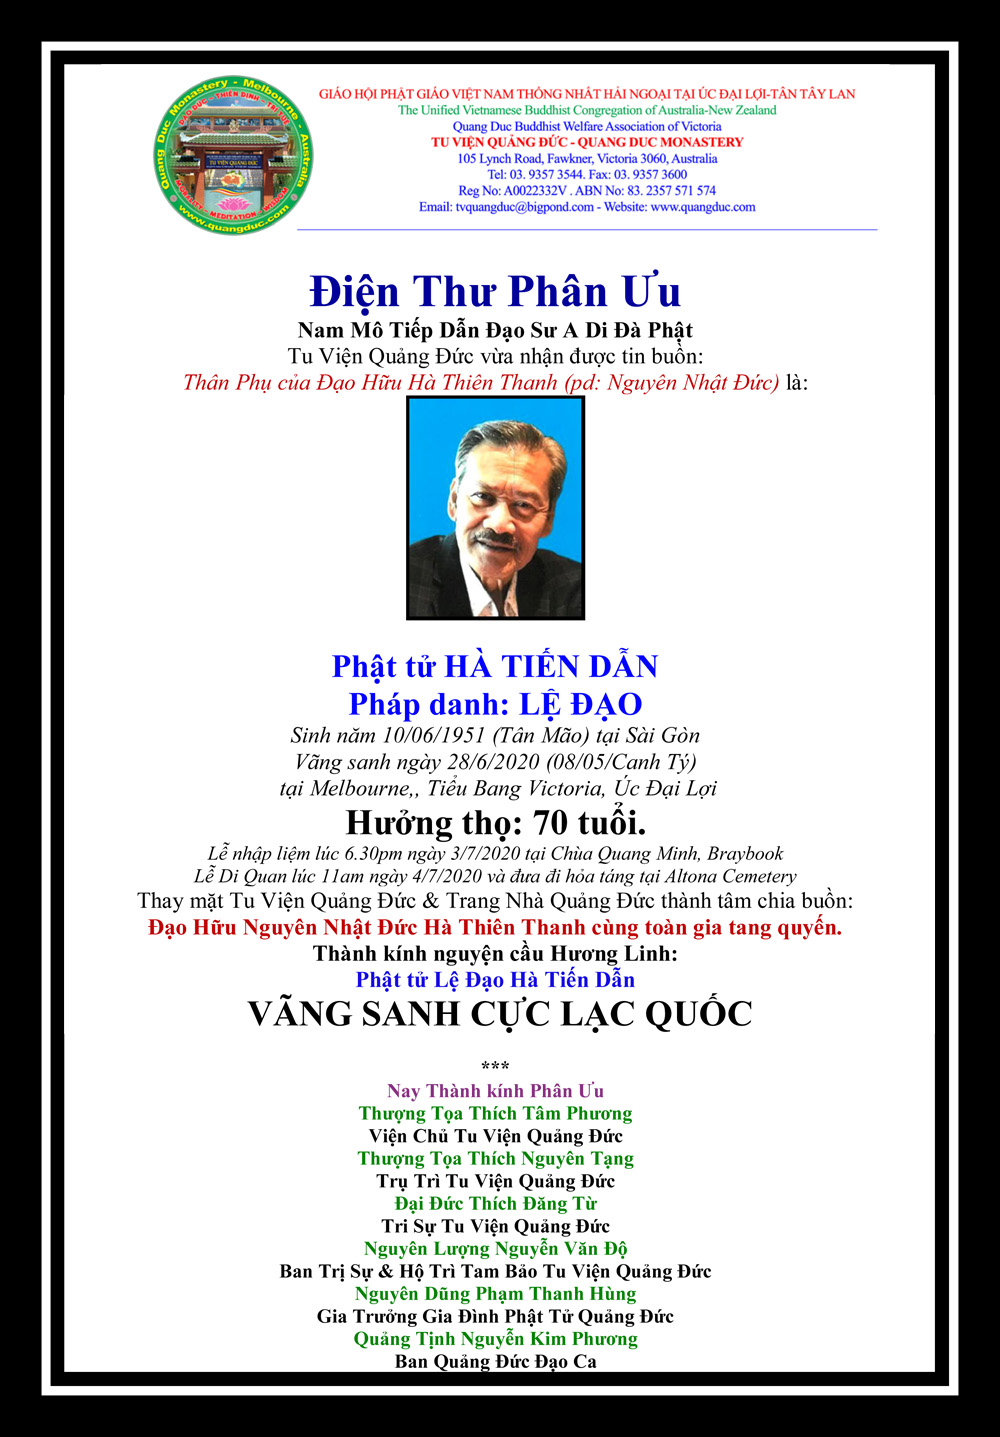 ong Ha Tien Dan-1951-2020